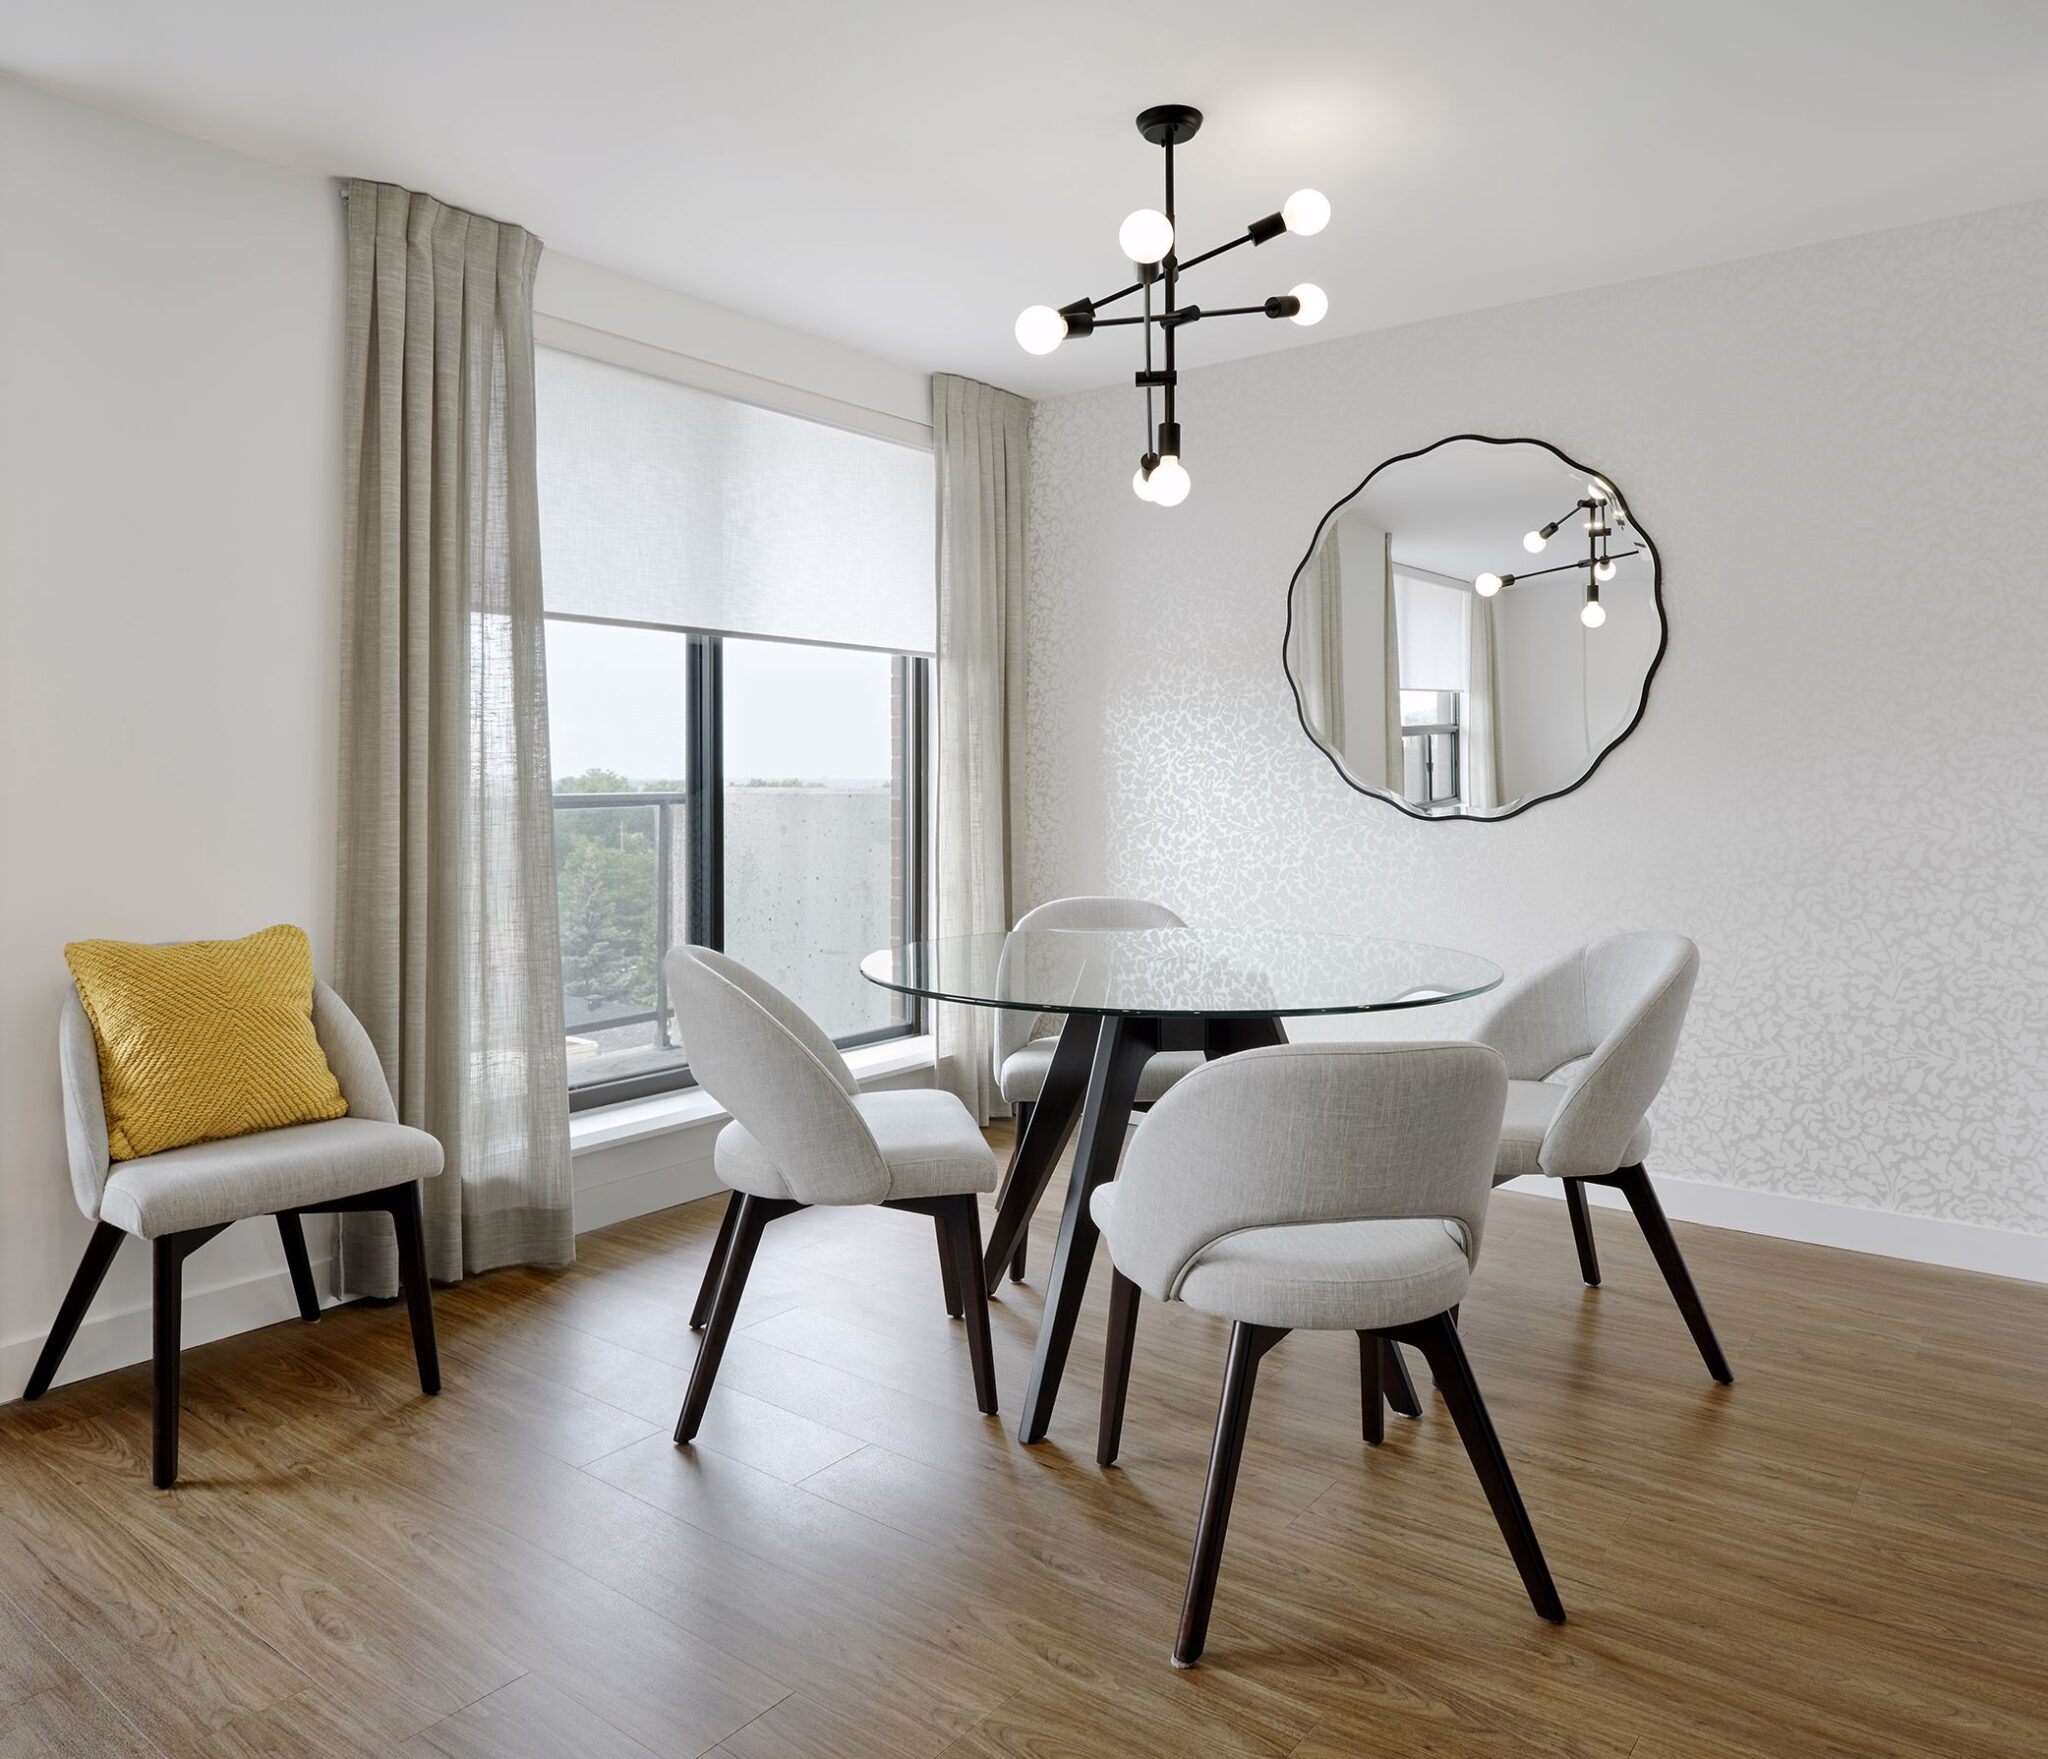 Keeping It Simple With Minimalist Interior Design